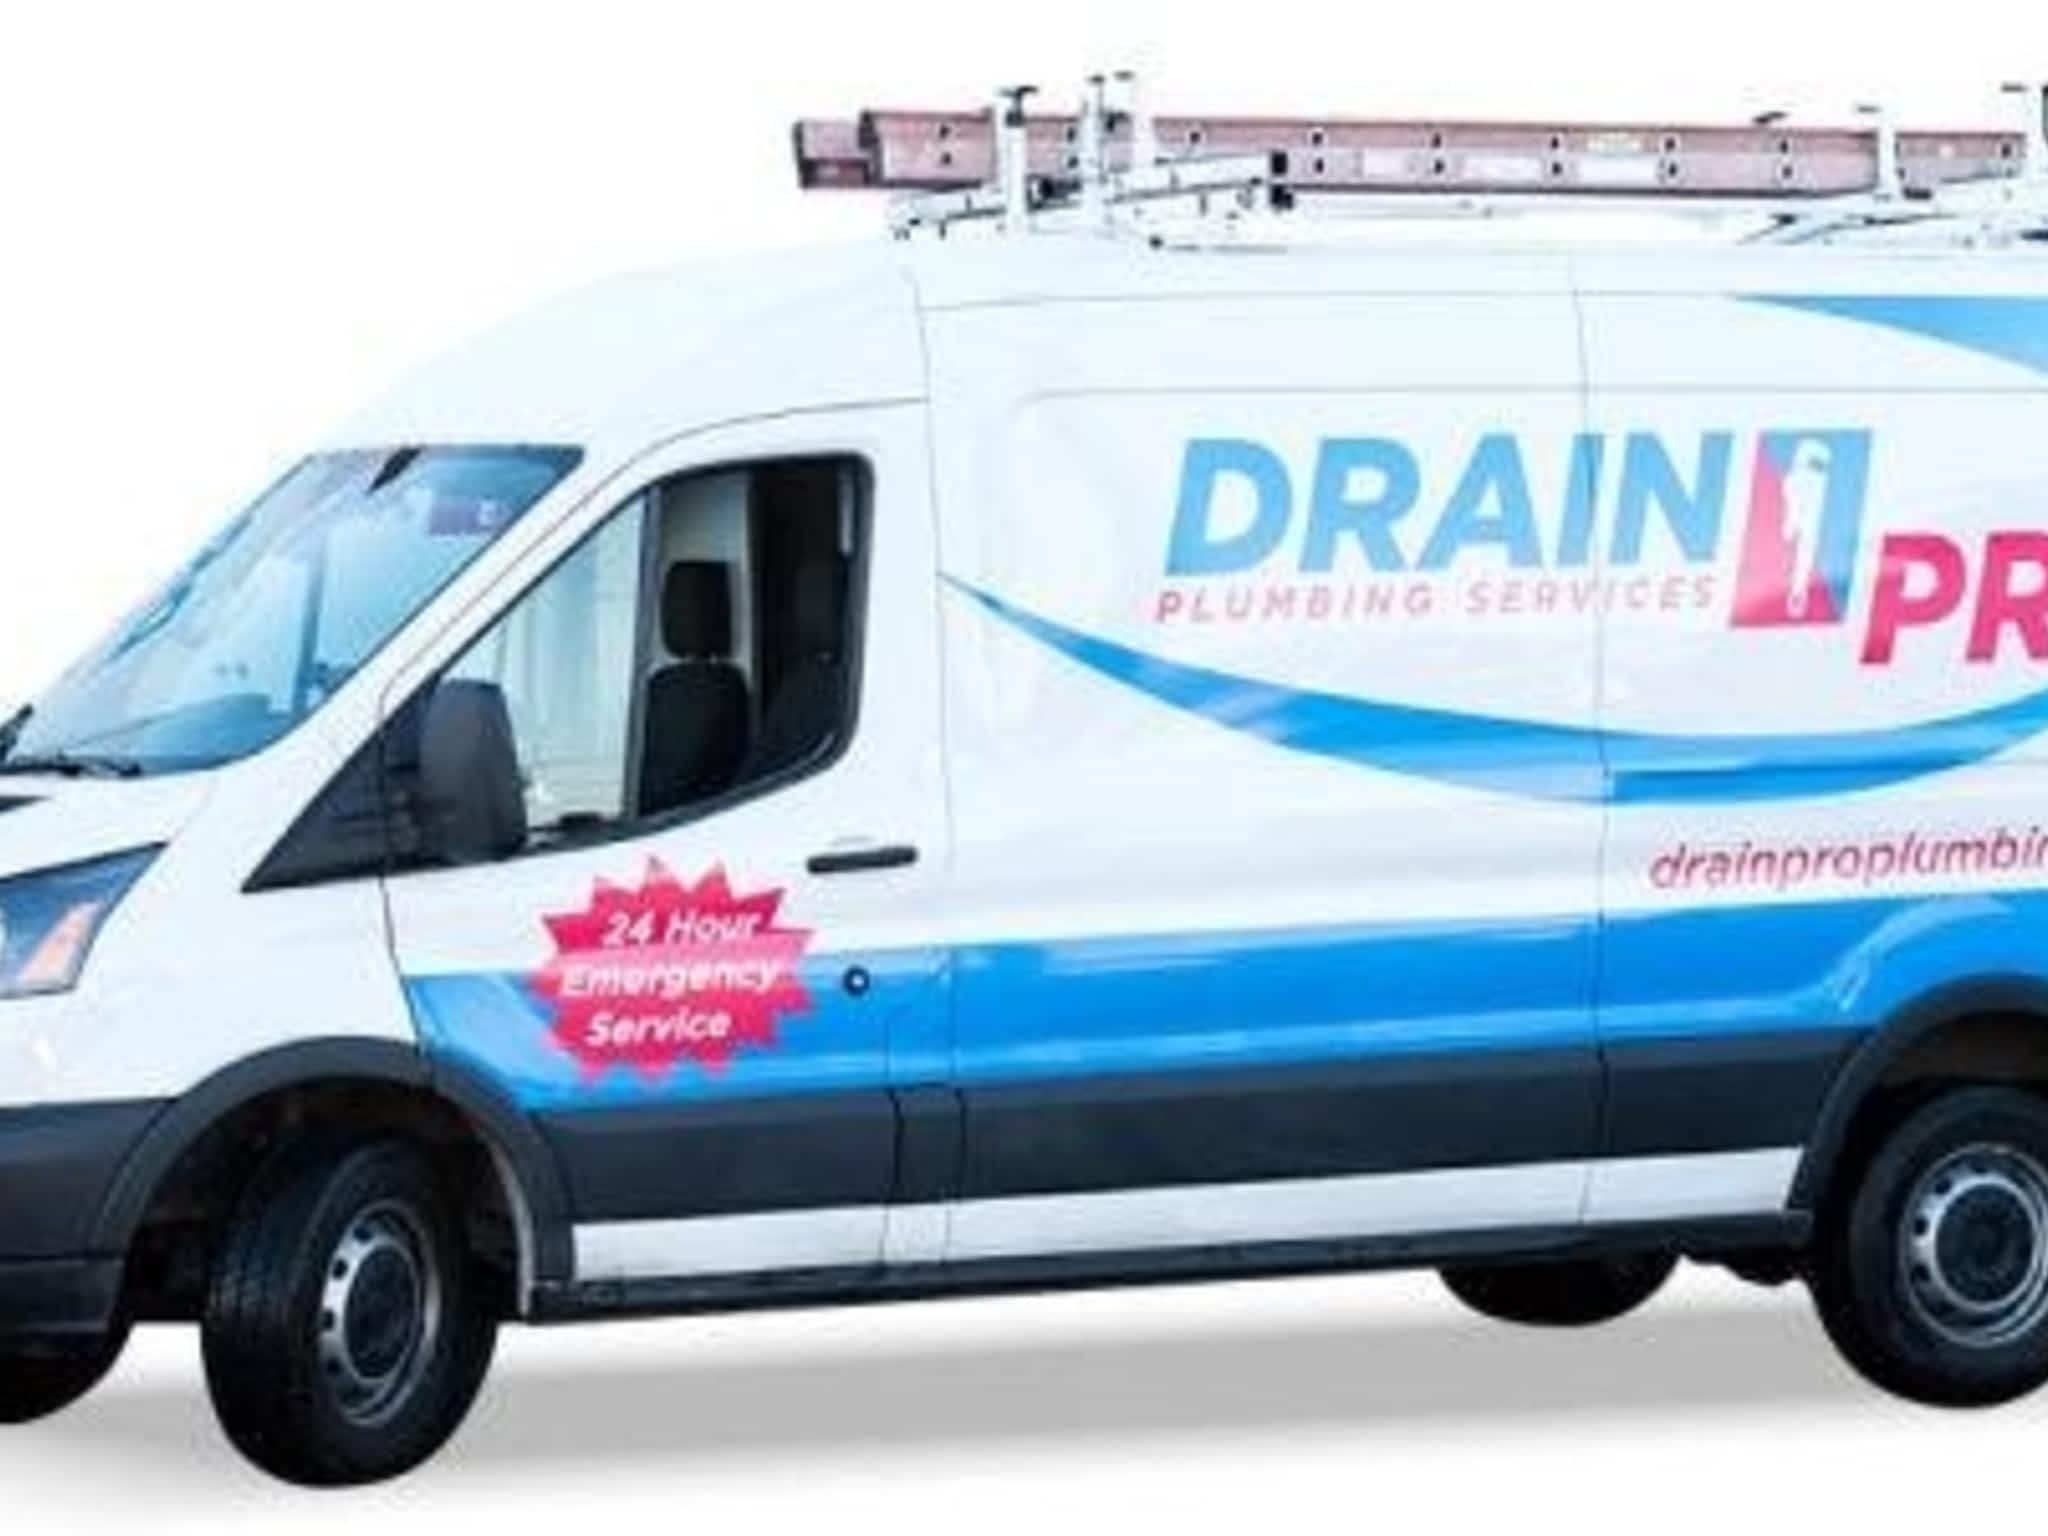 photo Drain Pro Plumbing & Drainage Ltd